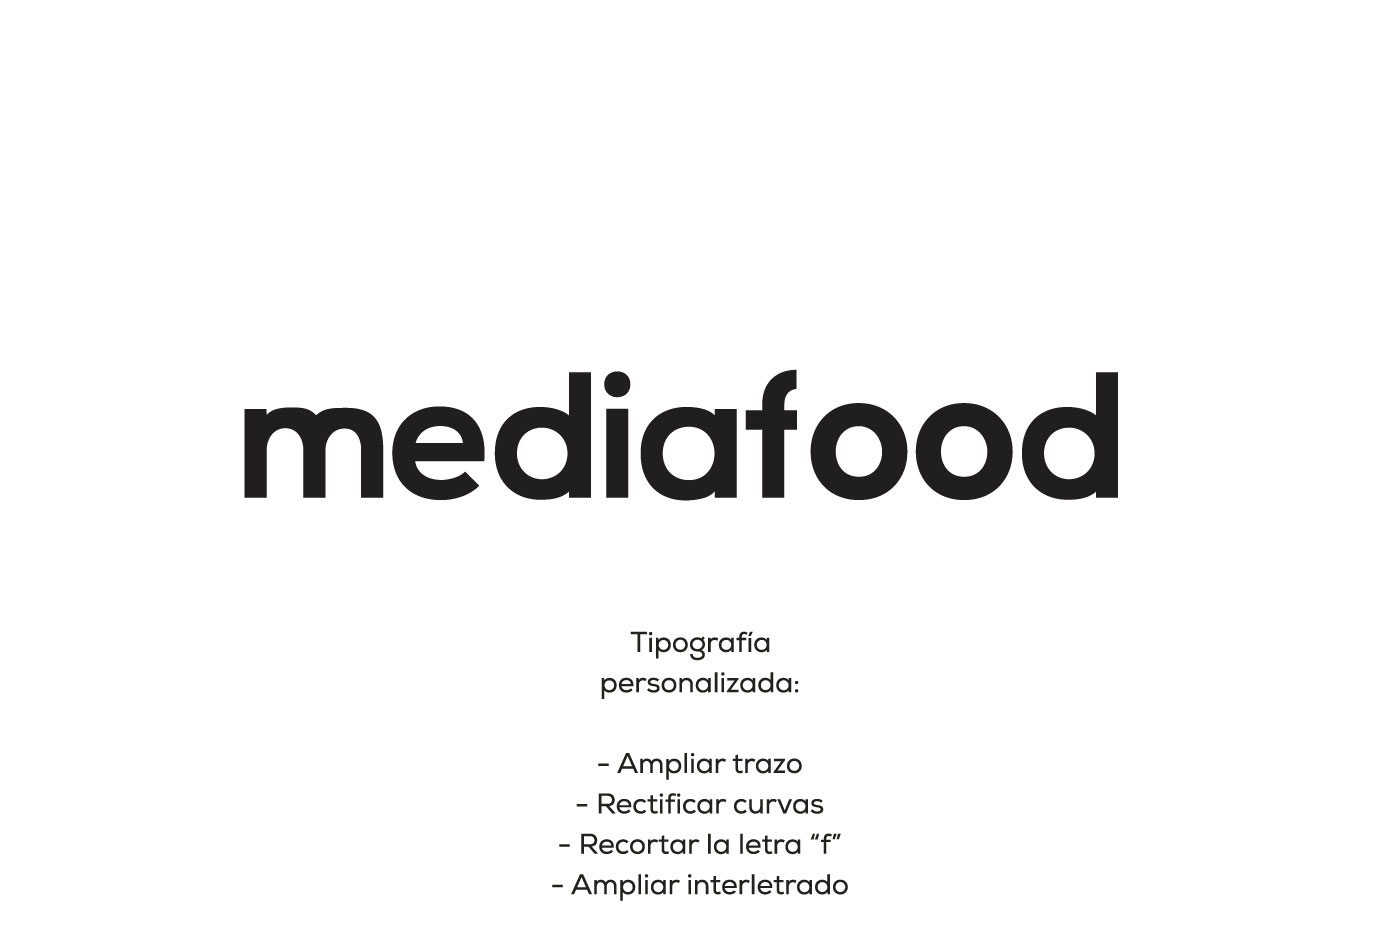 Mediafood idea original tipografia